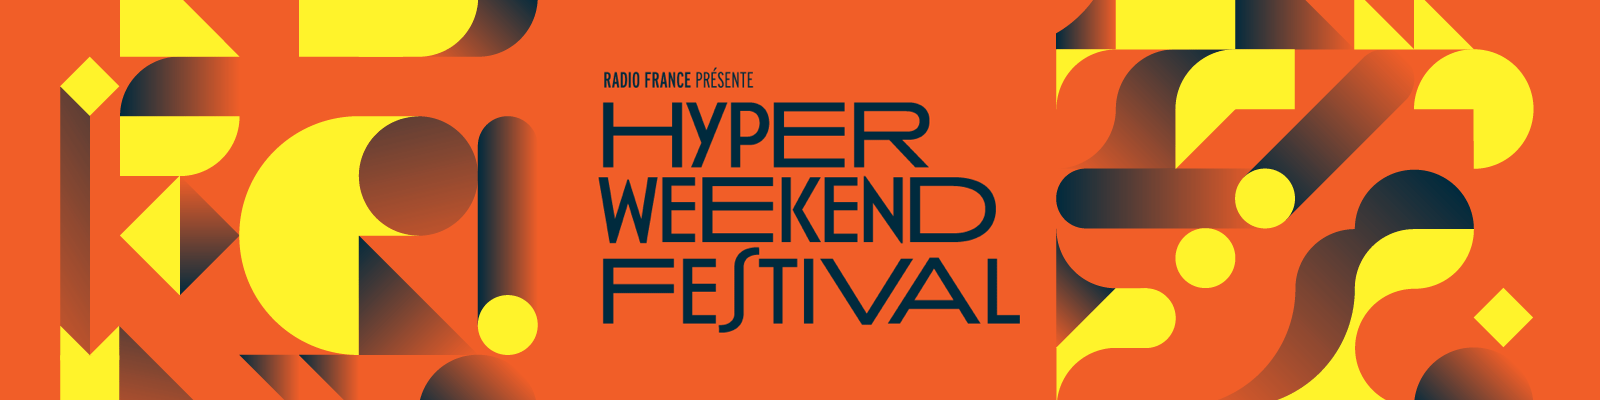 festival hyper week-end